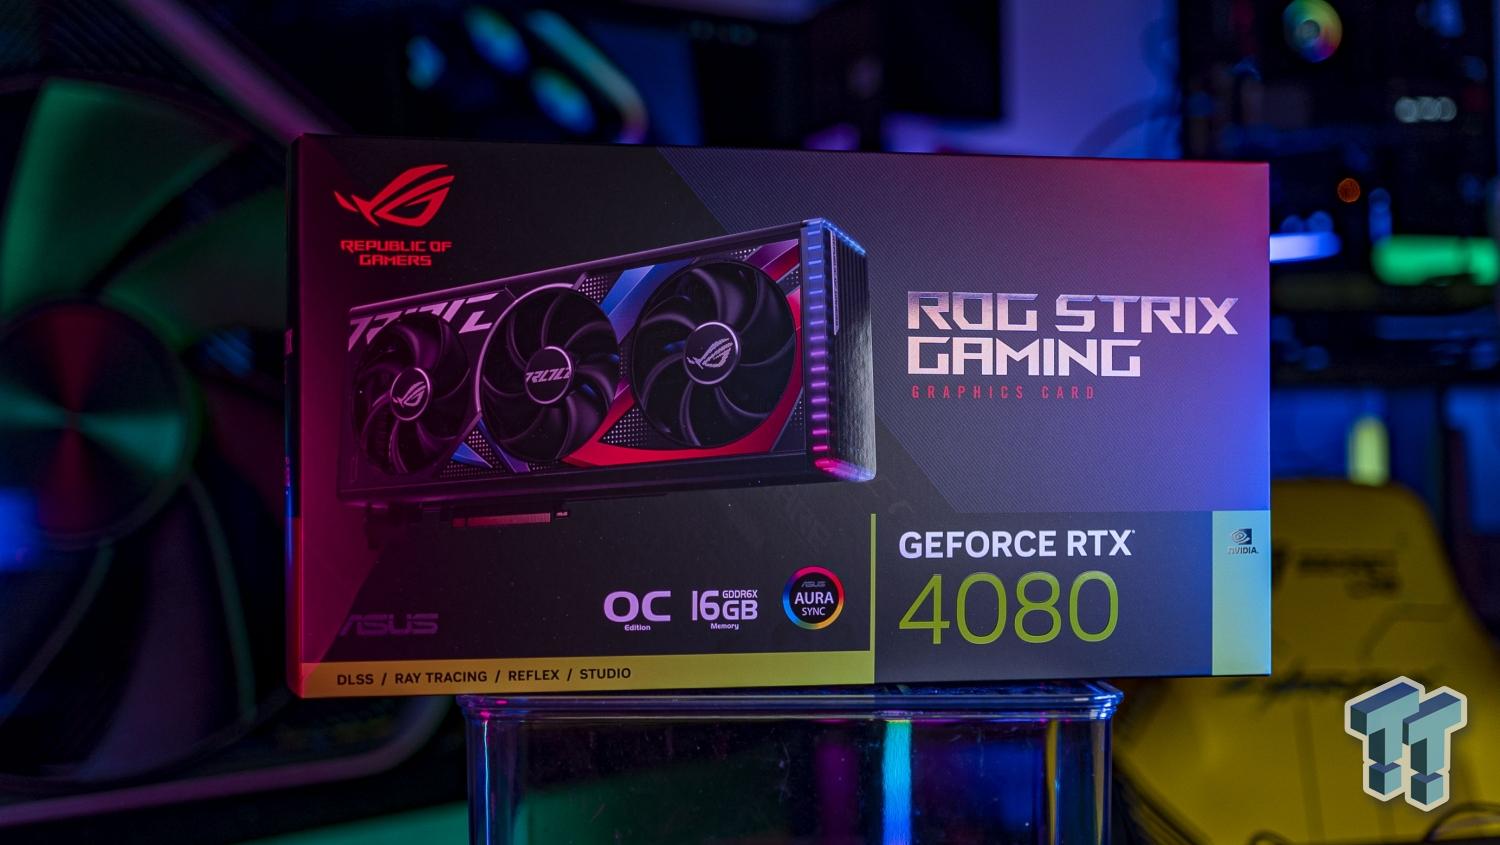 ASUS ROG Strix GeForce RTX 4080 Gaming Graphics Card (PCIe 4.0